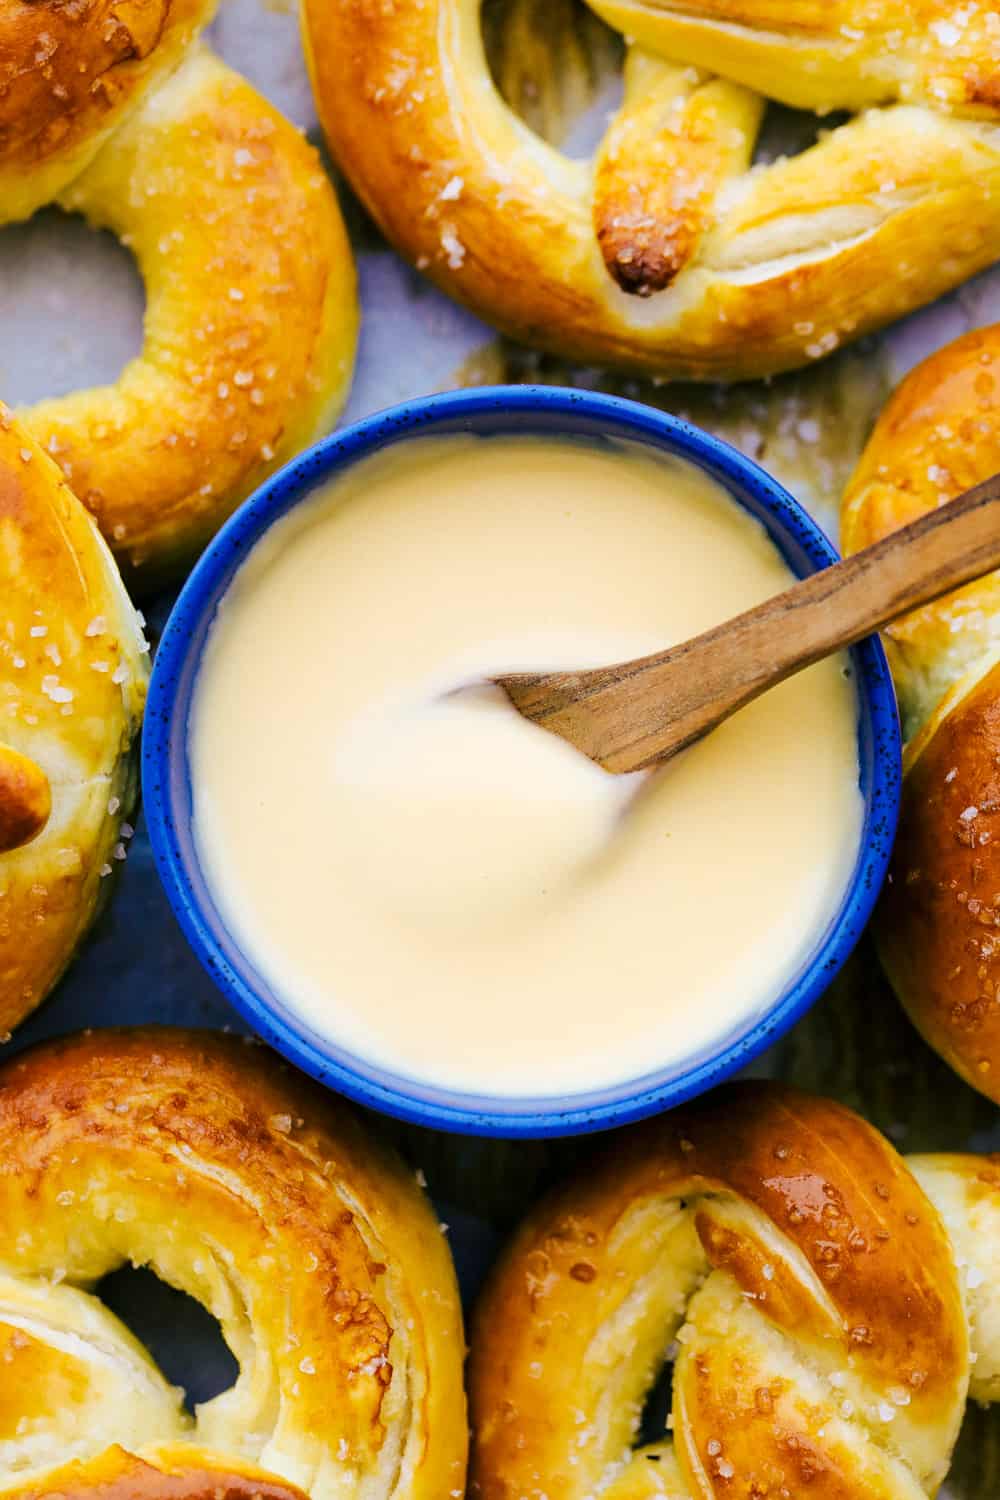 https://therecipecritic.com/wp-content/uploads/2020/07/baked_pretzel_cheesedip.jpg